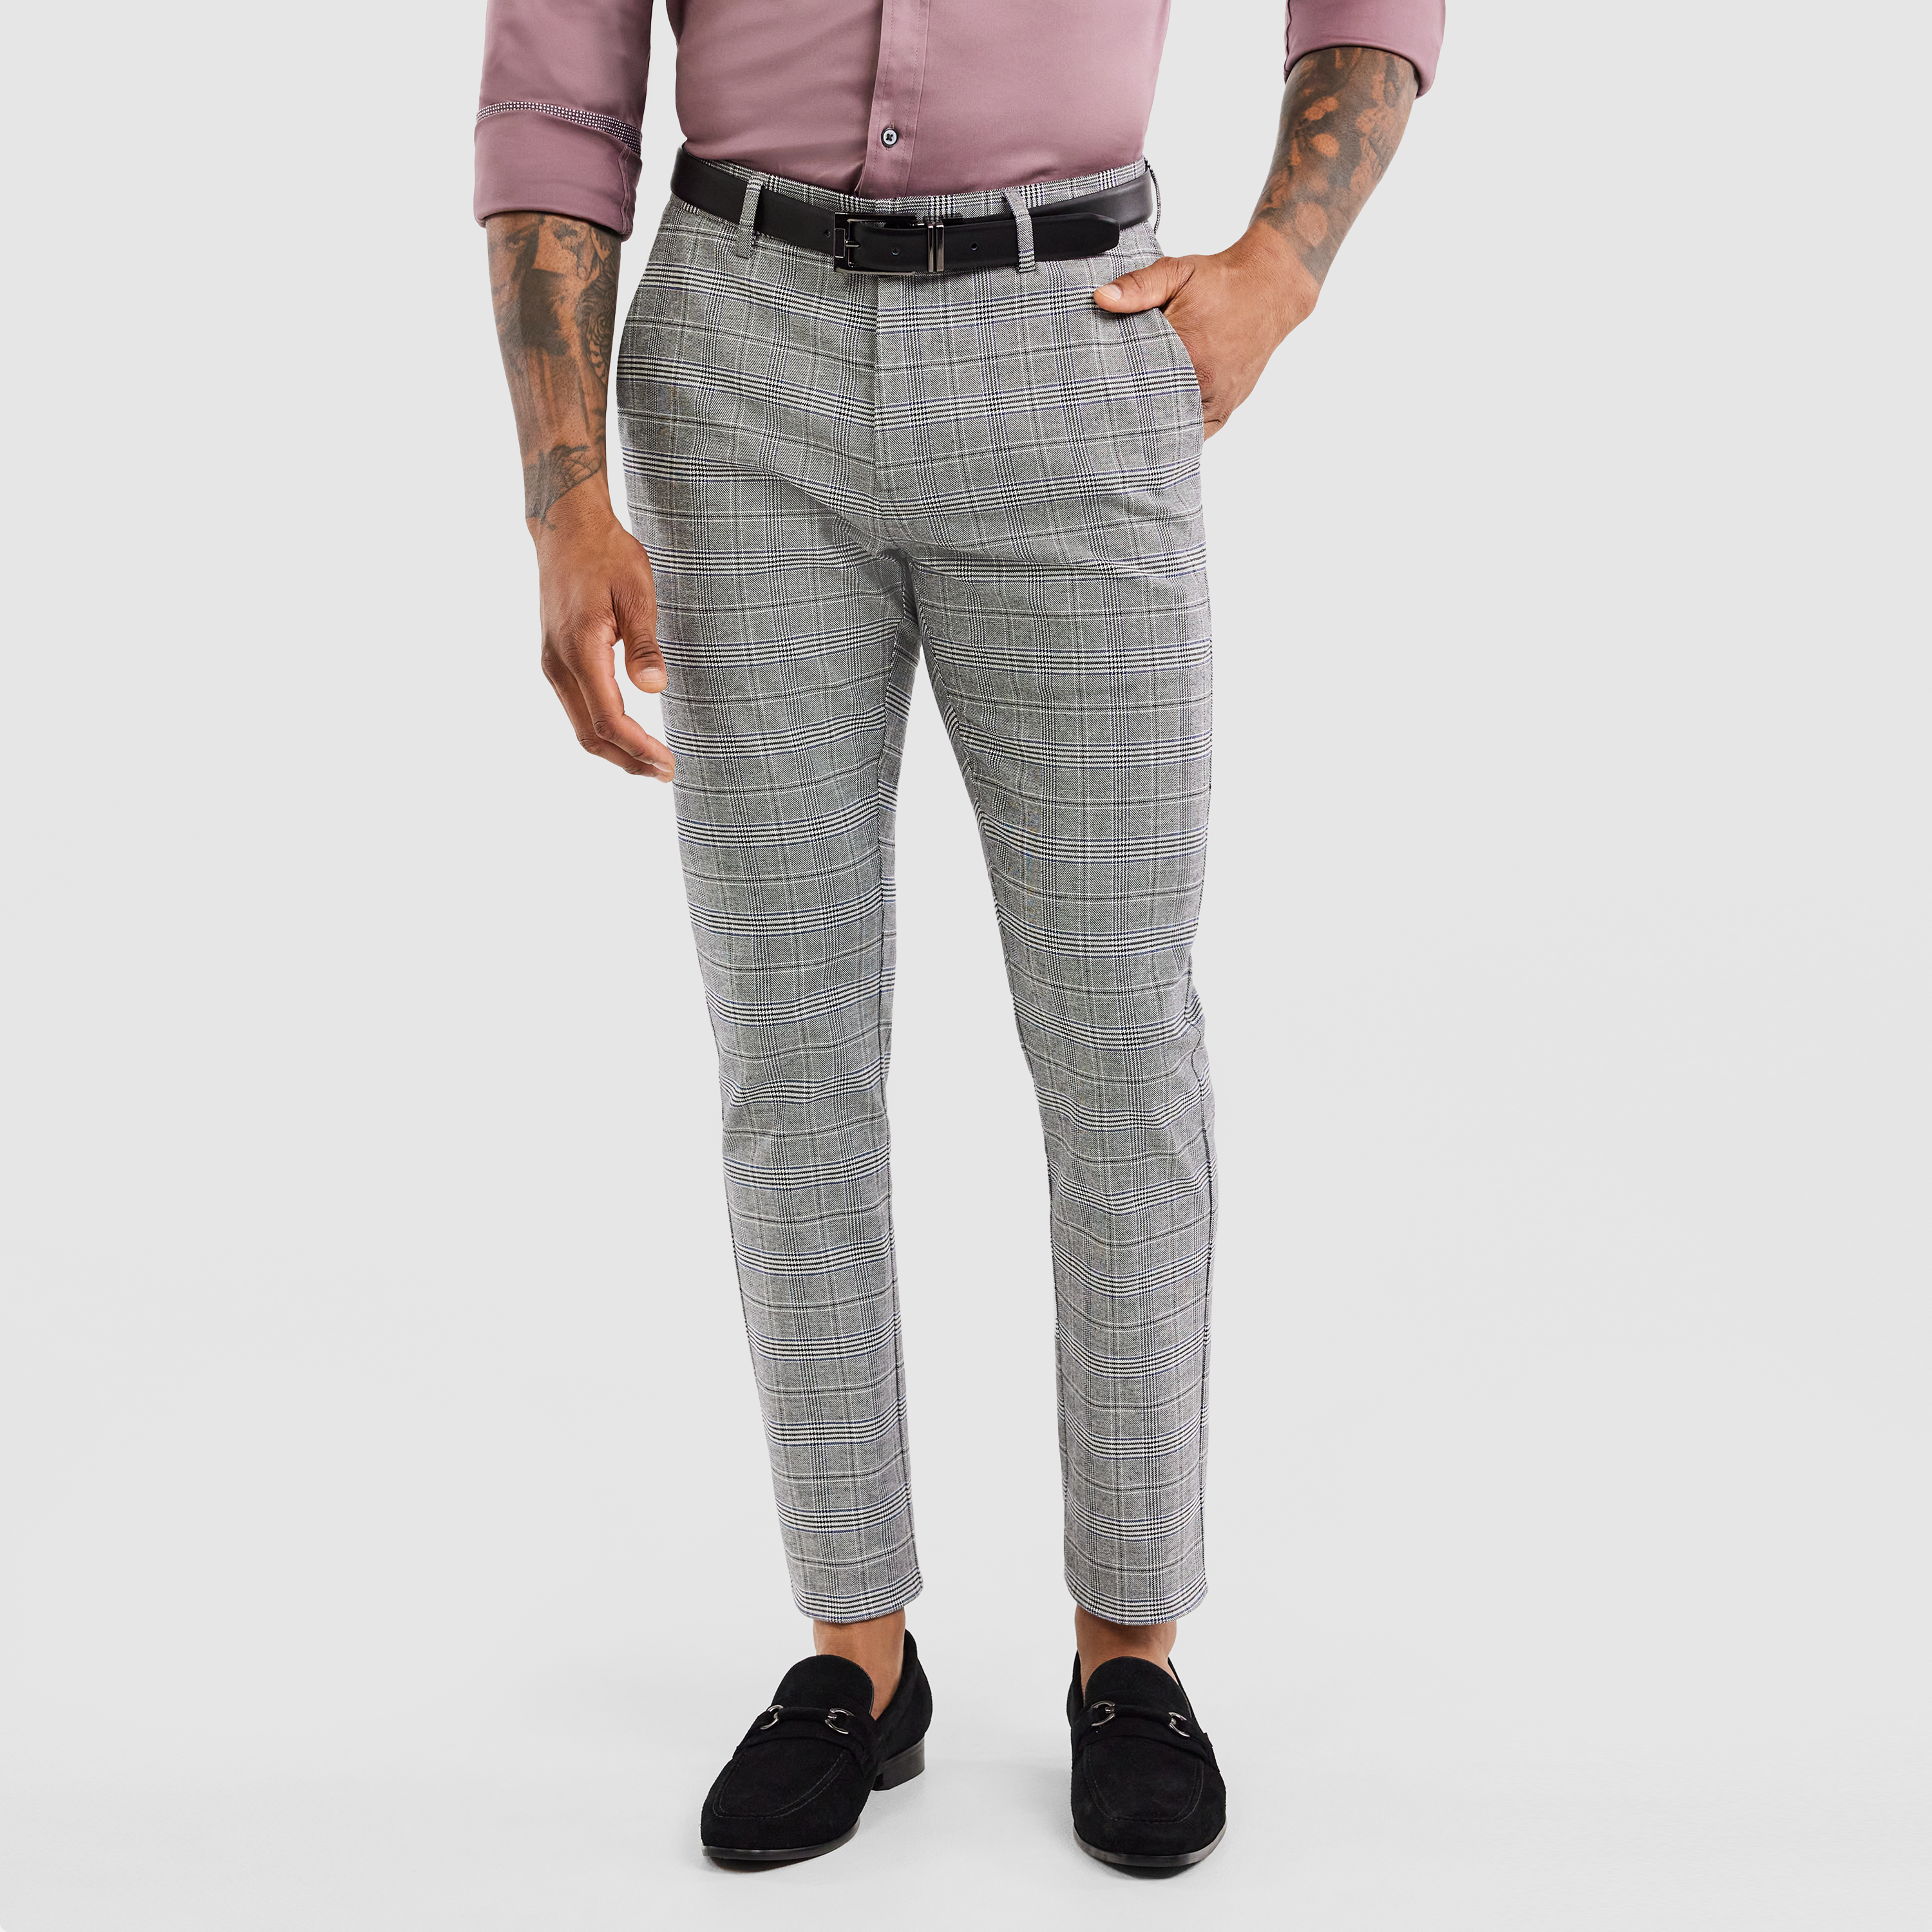 Buy Men Grey Check Slim Fit Formal Trousers Online - 676606 | Peter England